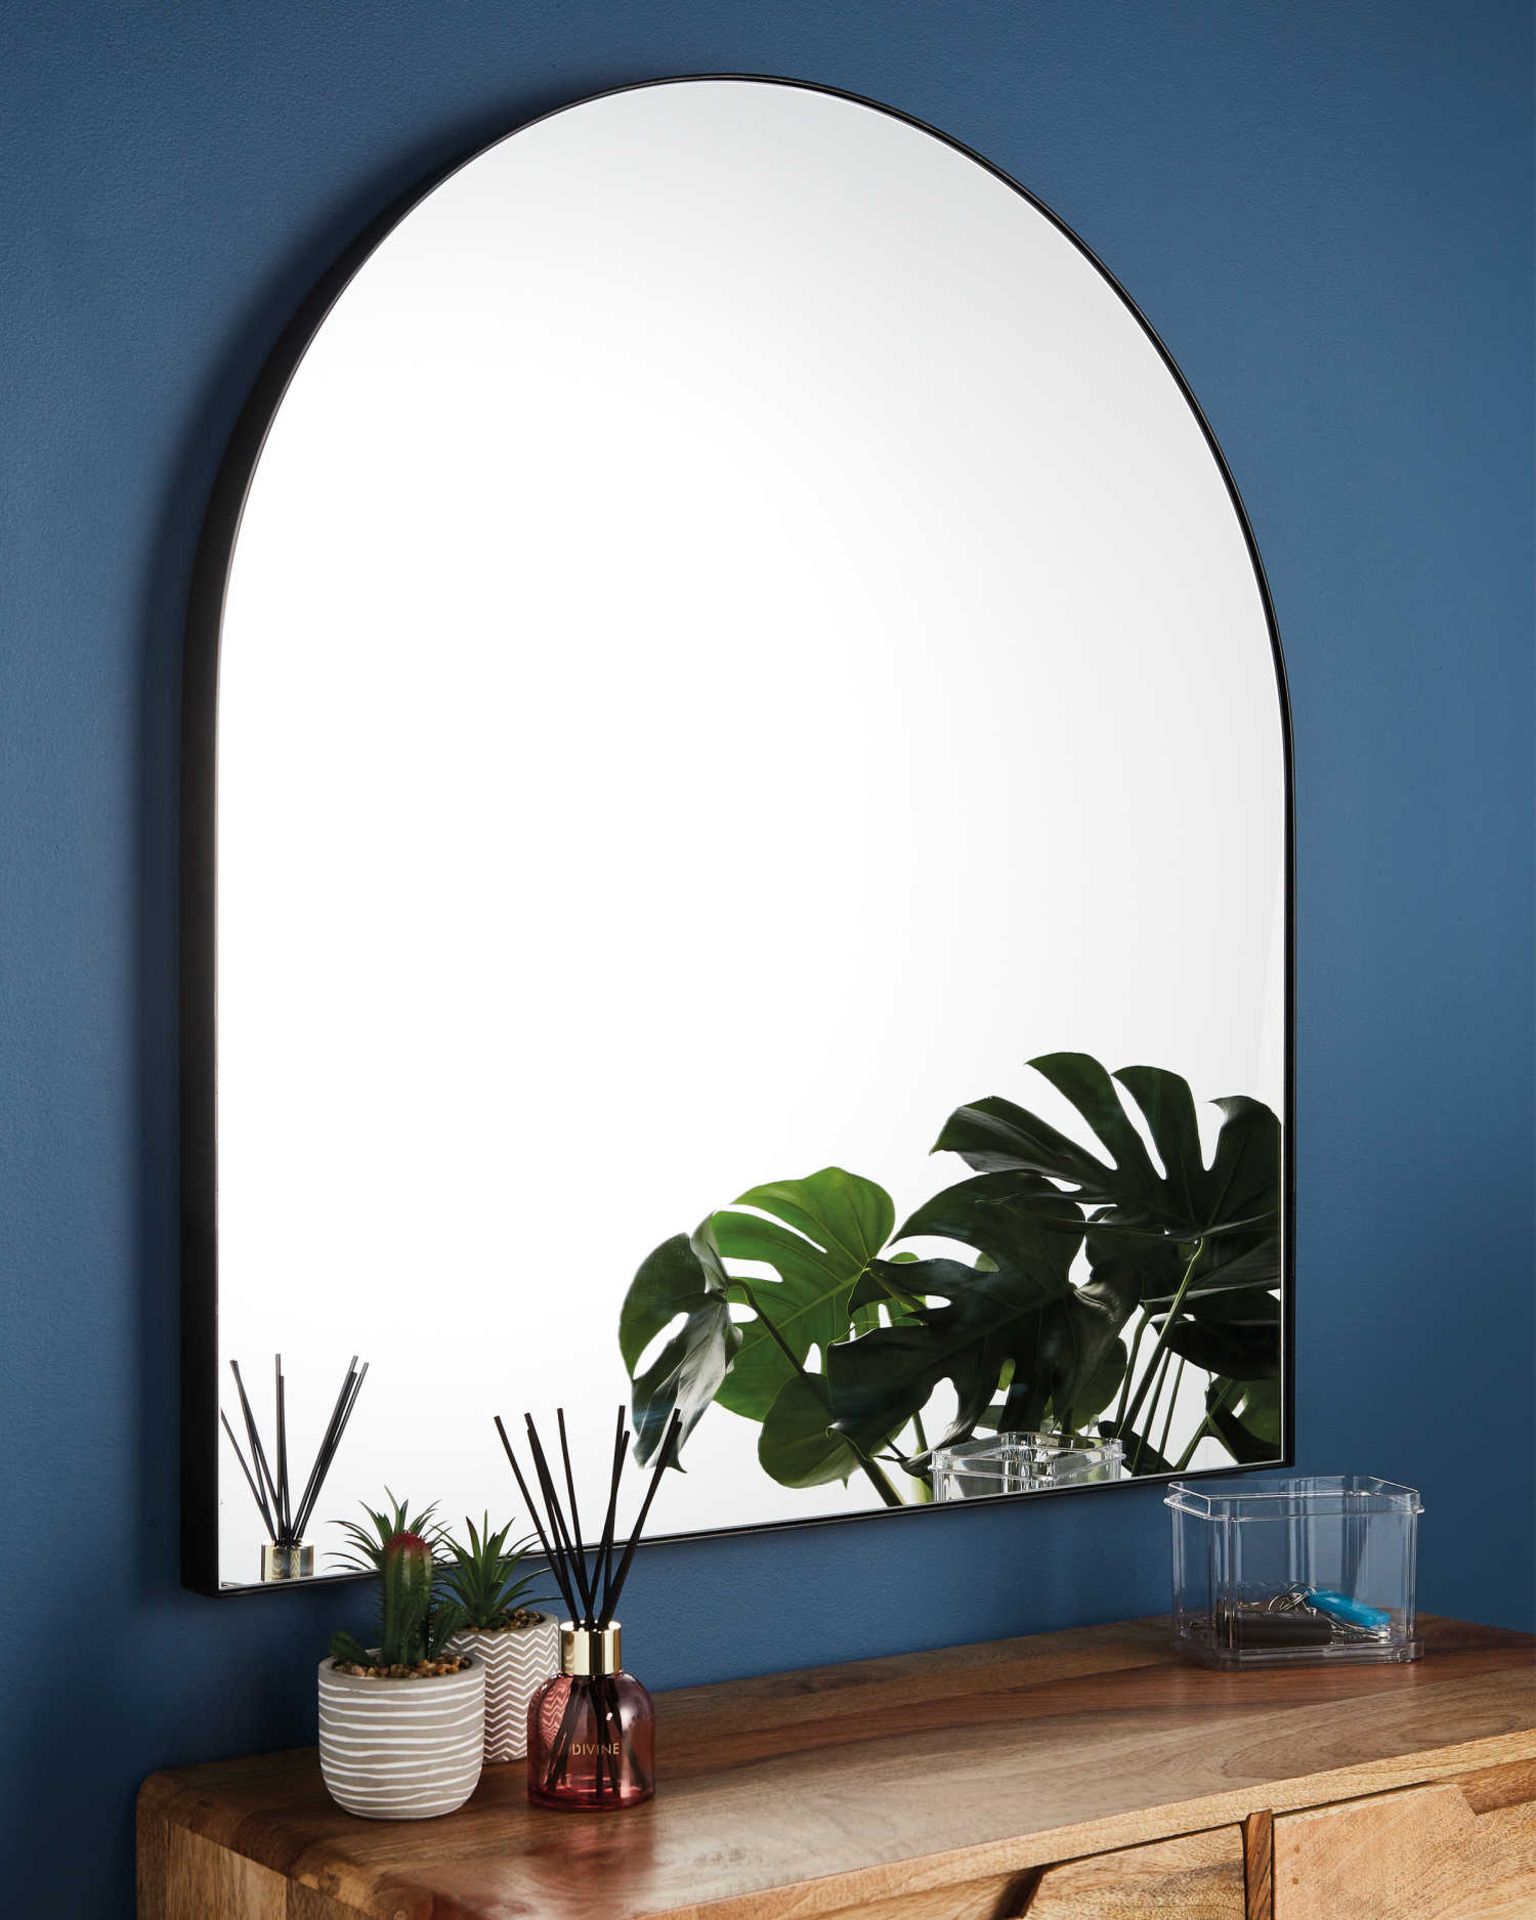 2 x Luxury Black Arch Mirror. Upgrade your indoor space with this Luxury Black Arch Mirror. This